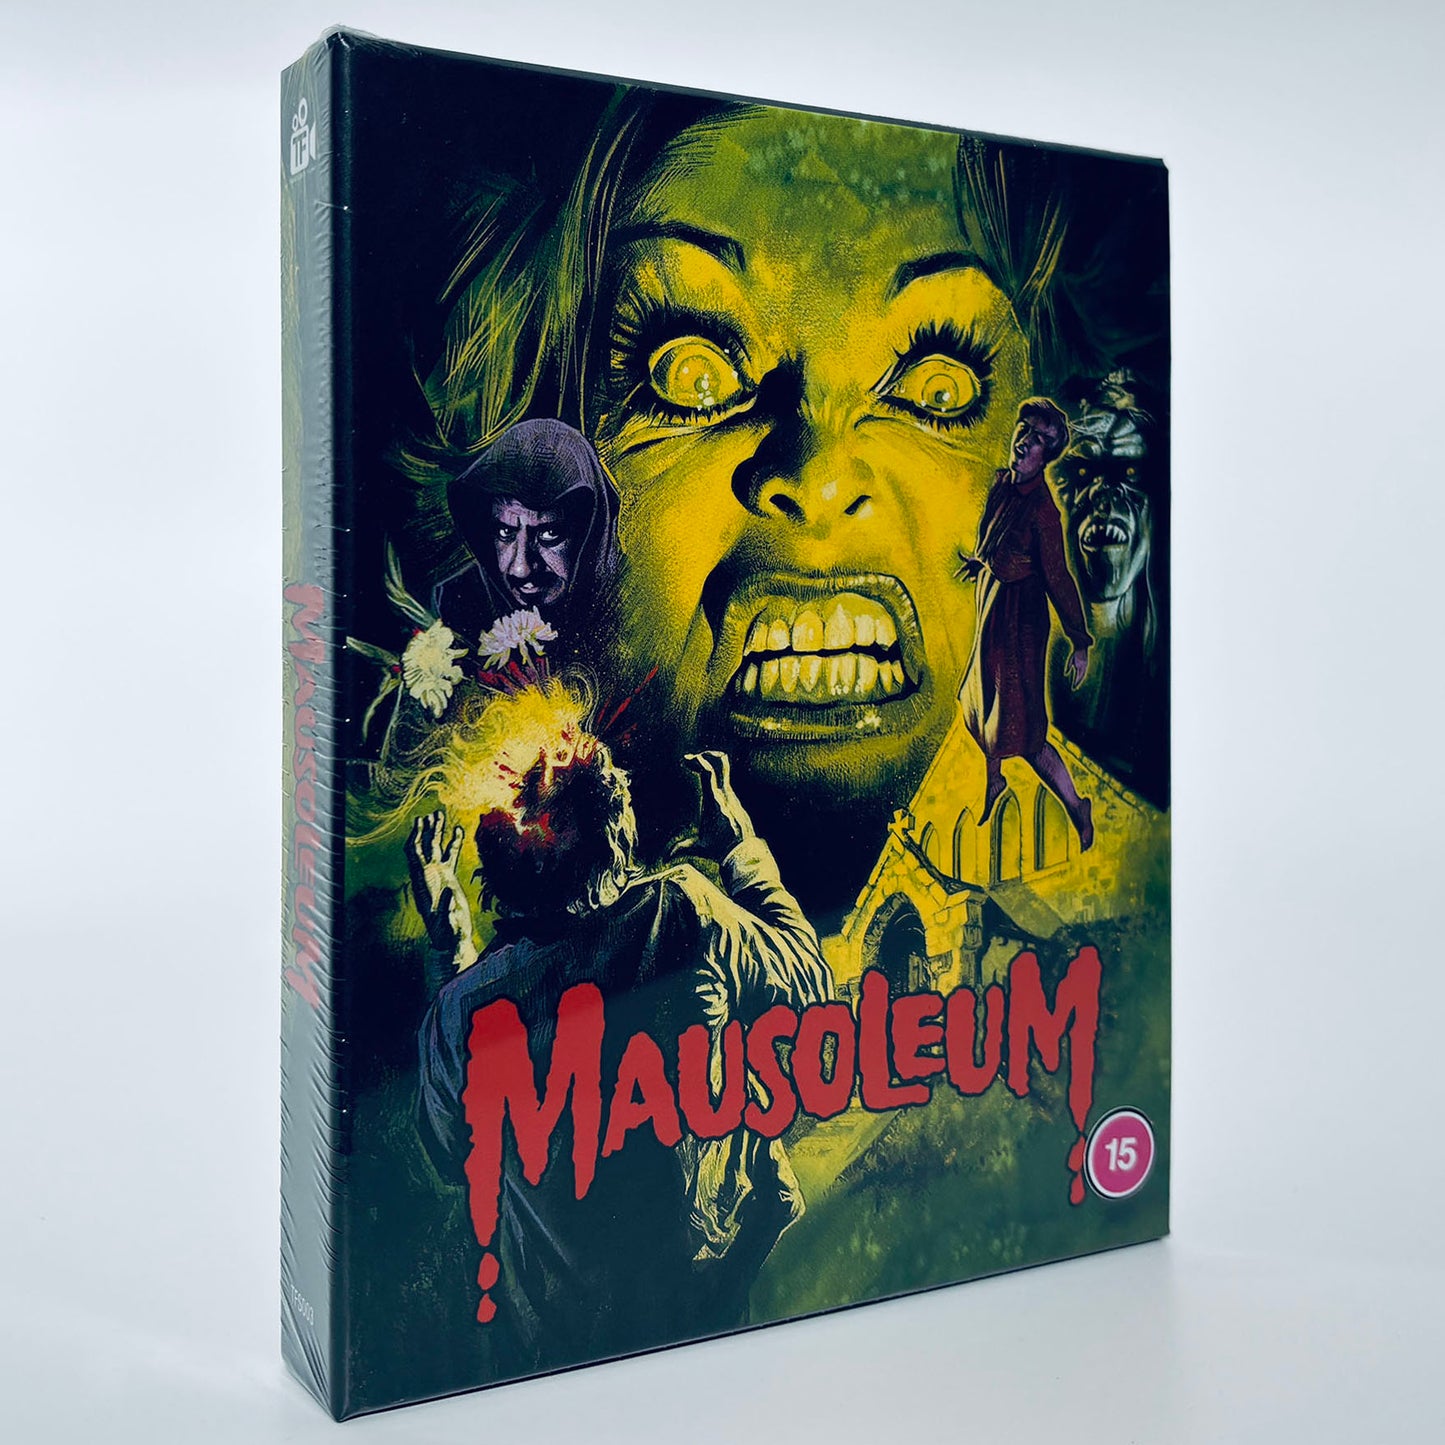 Mausoleum 1983 Horror Limited Edition Region ABC Blu-ray Treasured Films UK